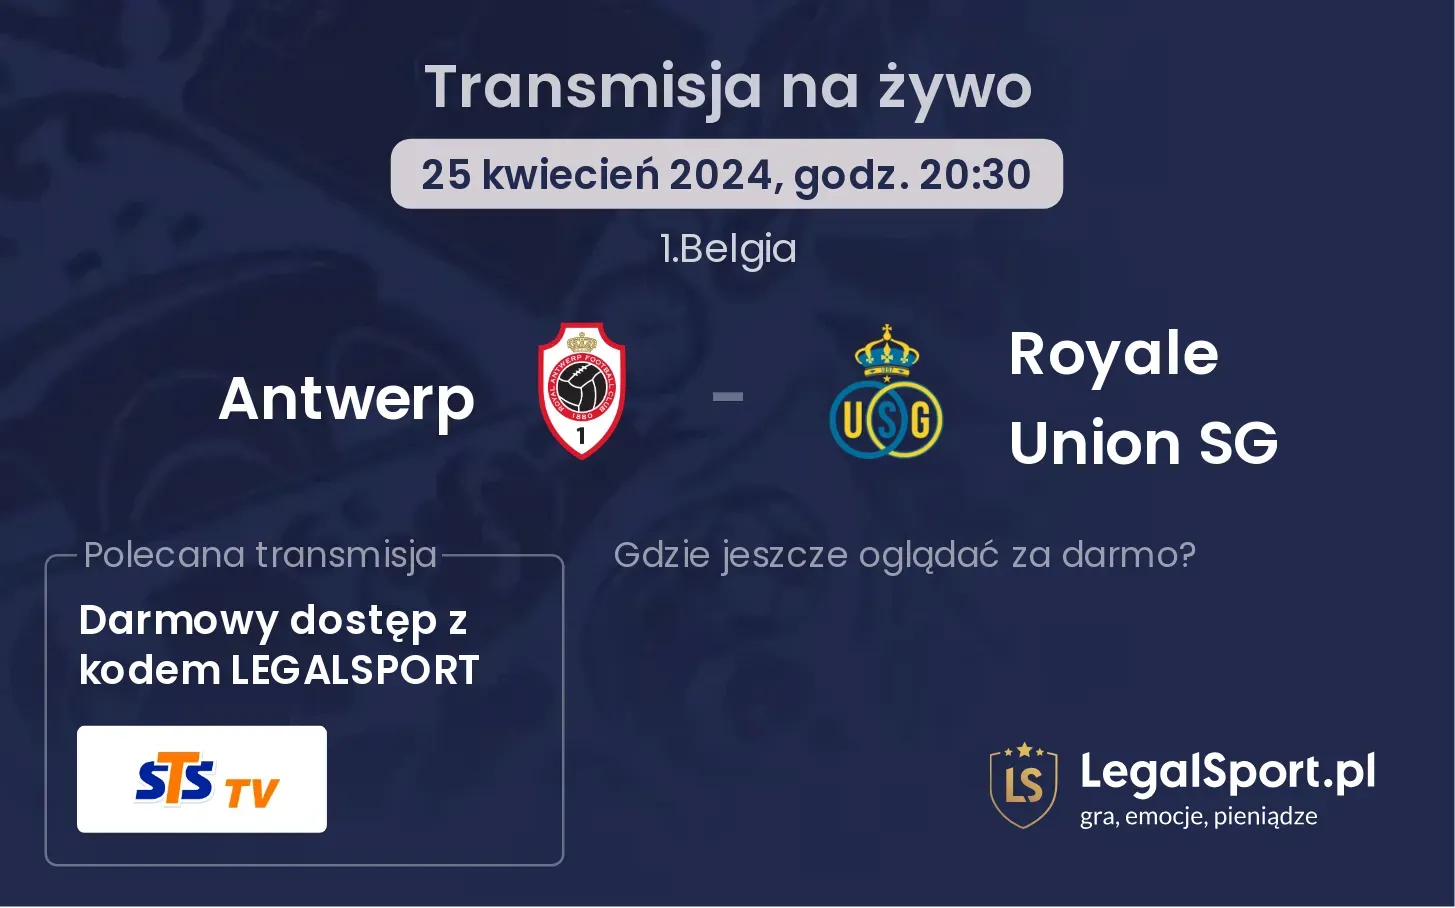 Antwerp - Royale Union SG transmisja na żywo